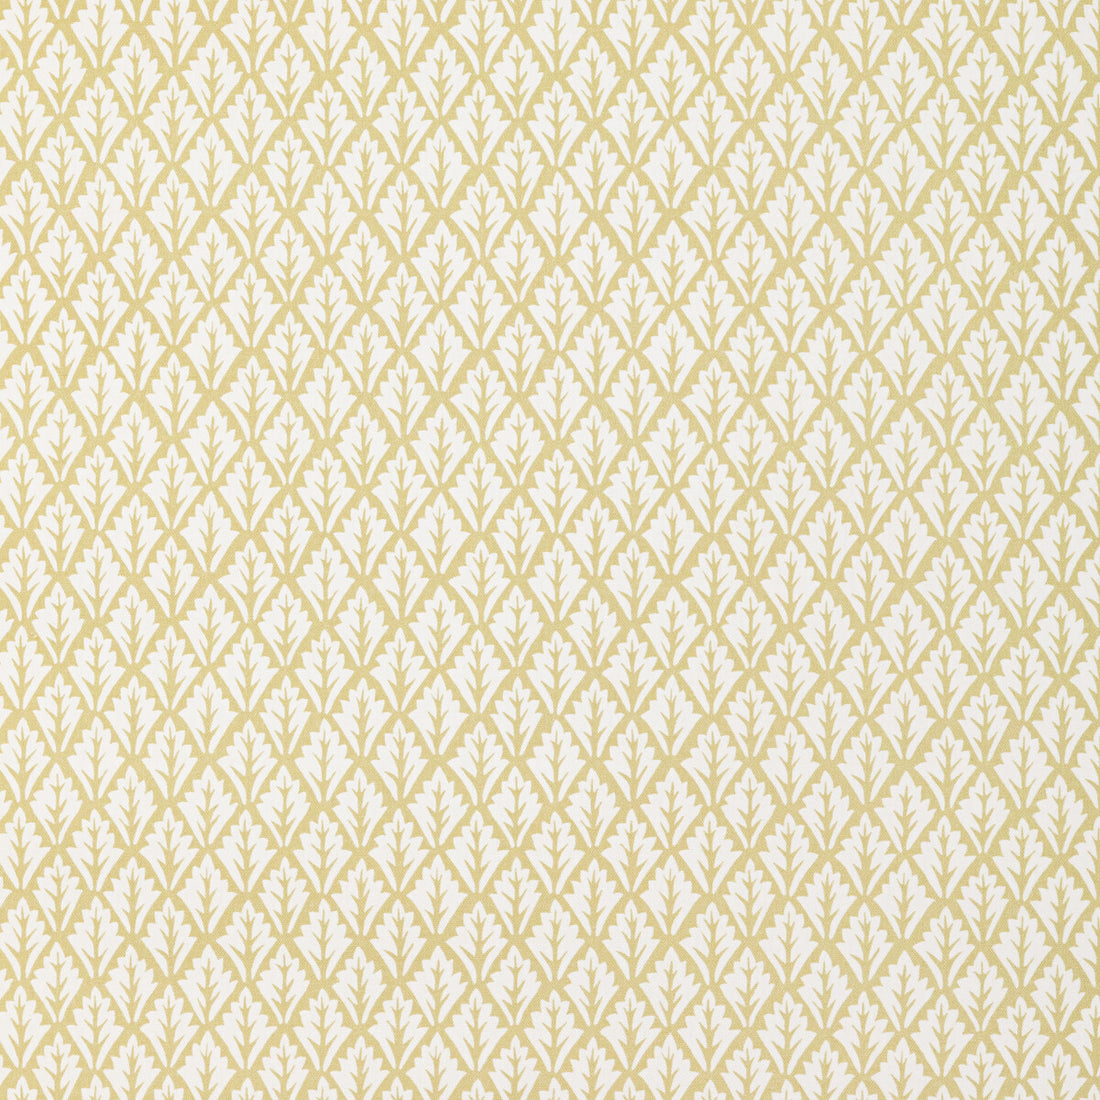 Dorso fabric in maize color - pattern DORSO.16.0 - by Kravet Basics